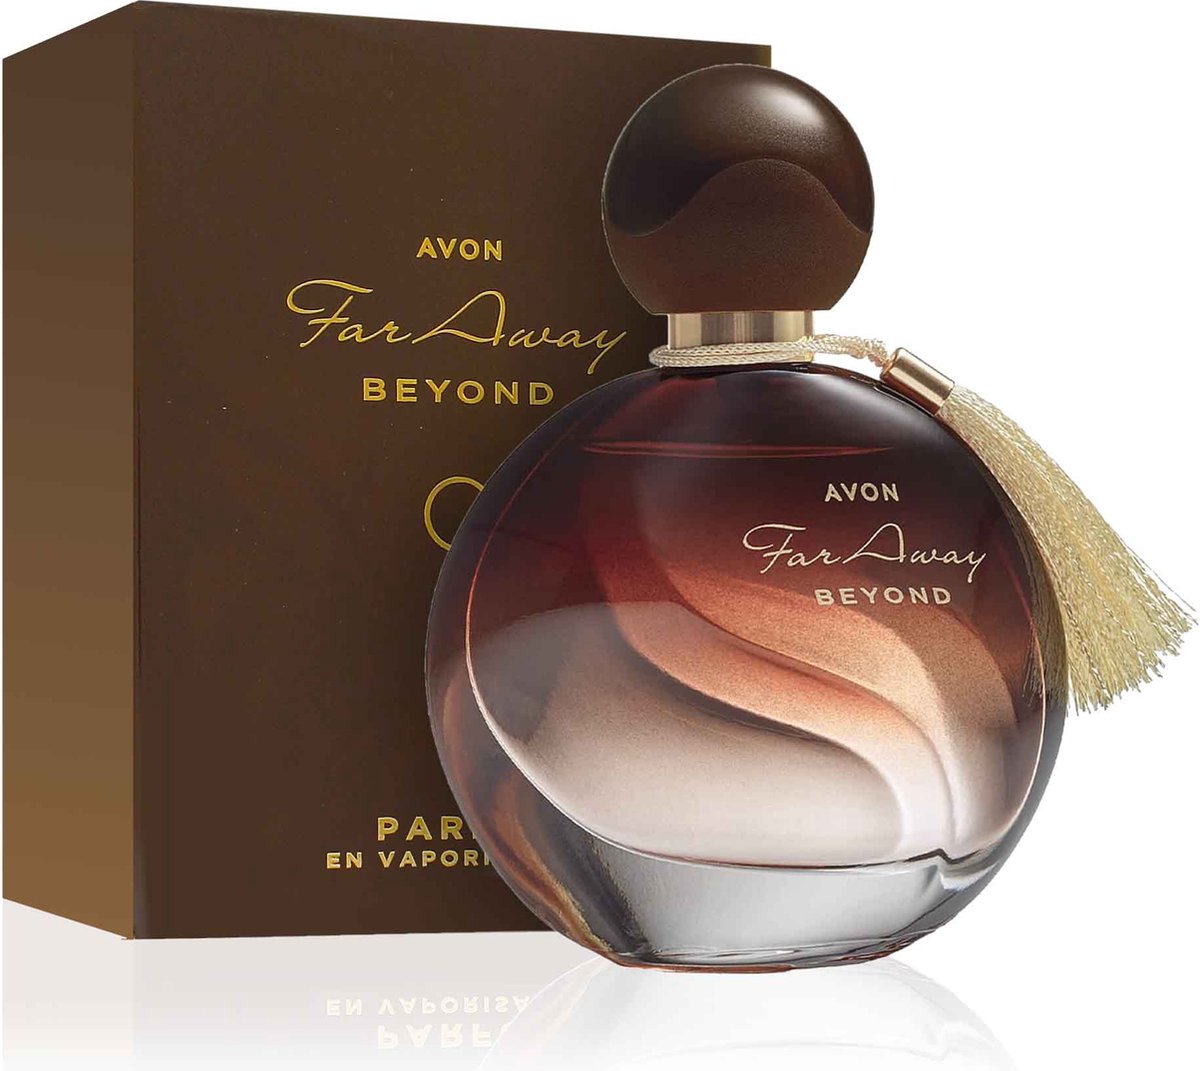 Avon Parfum - Far Away Beyond 50ml